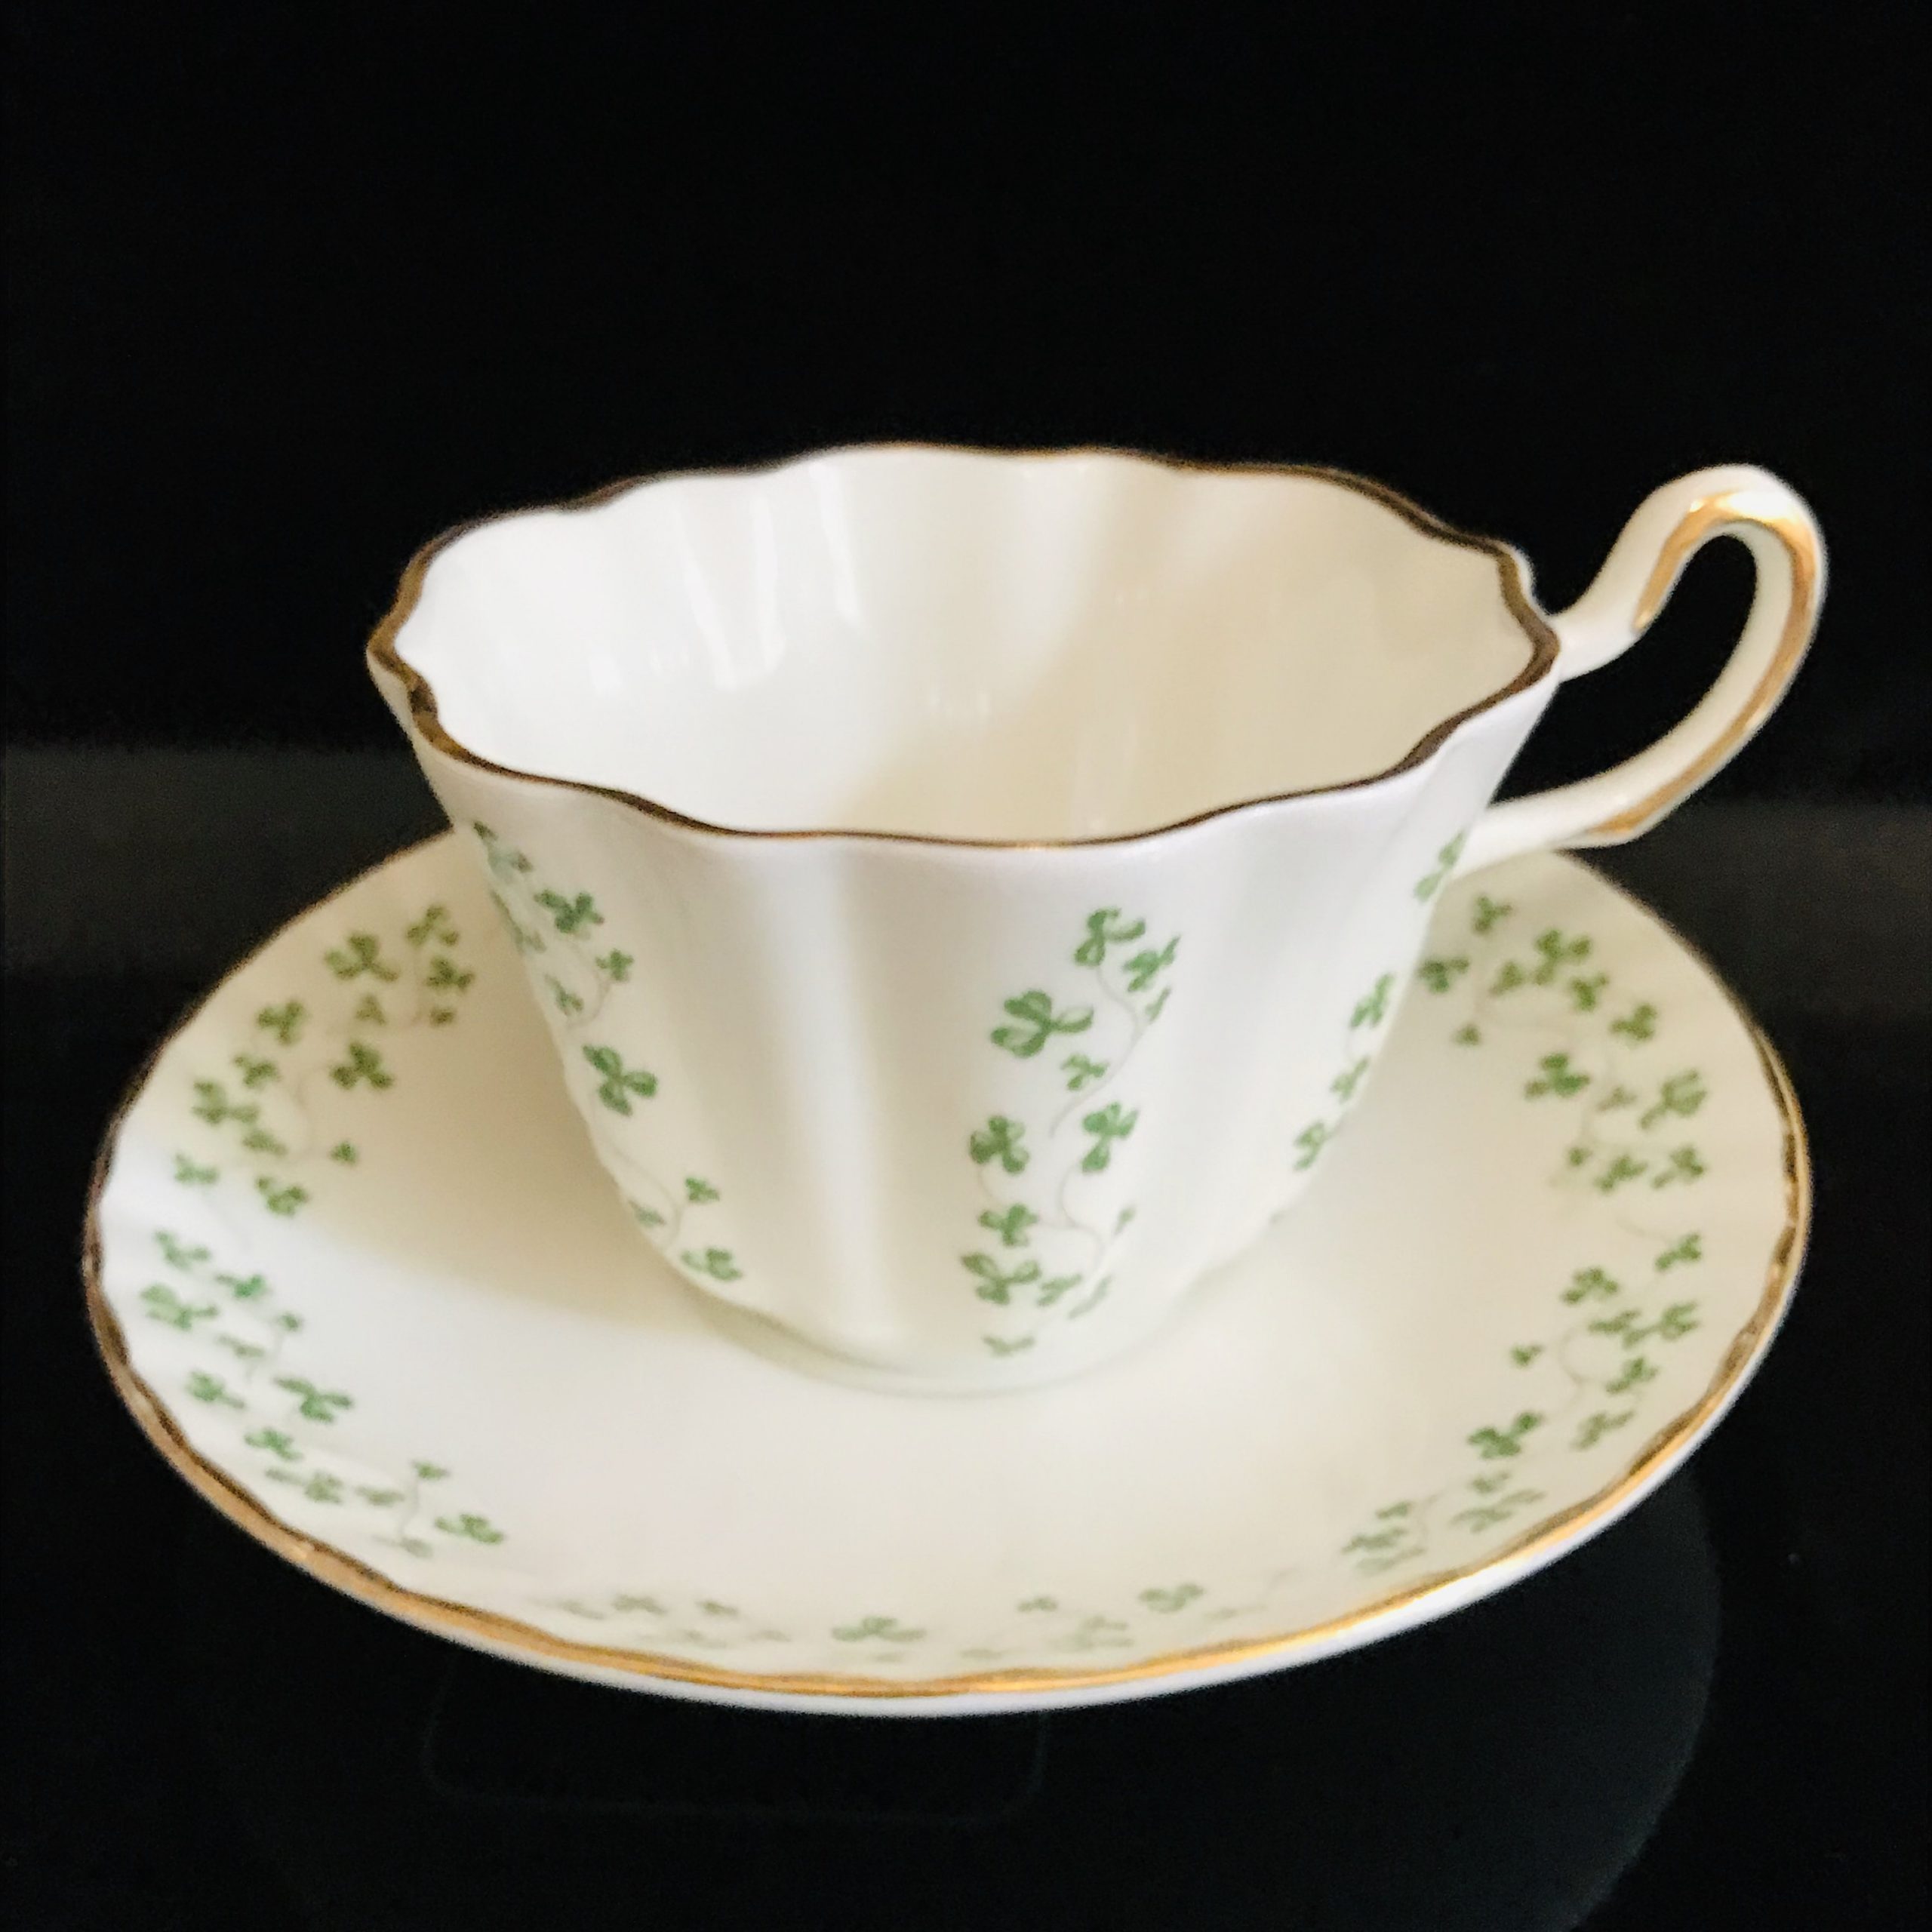 https://www.truevintageantiques.com/wp-content/uploads/2019/12/royal-tara-light-green-clover-tea-cup-and-saucer-ireland-fine-bone-china-heavy-gold-trim-farmhouse-collectible-display-5e0543c12-scaled.jpg